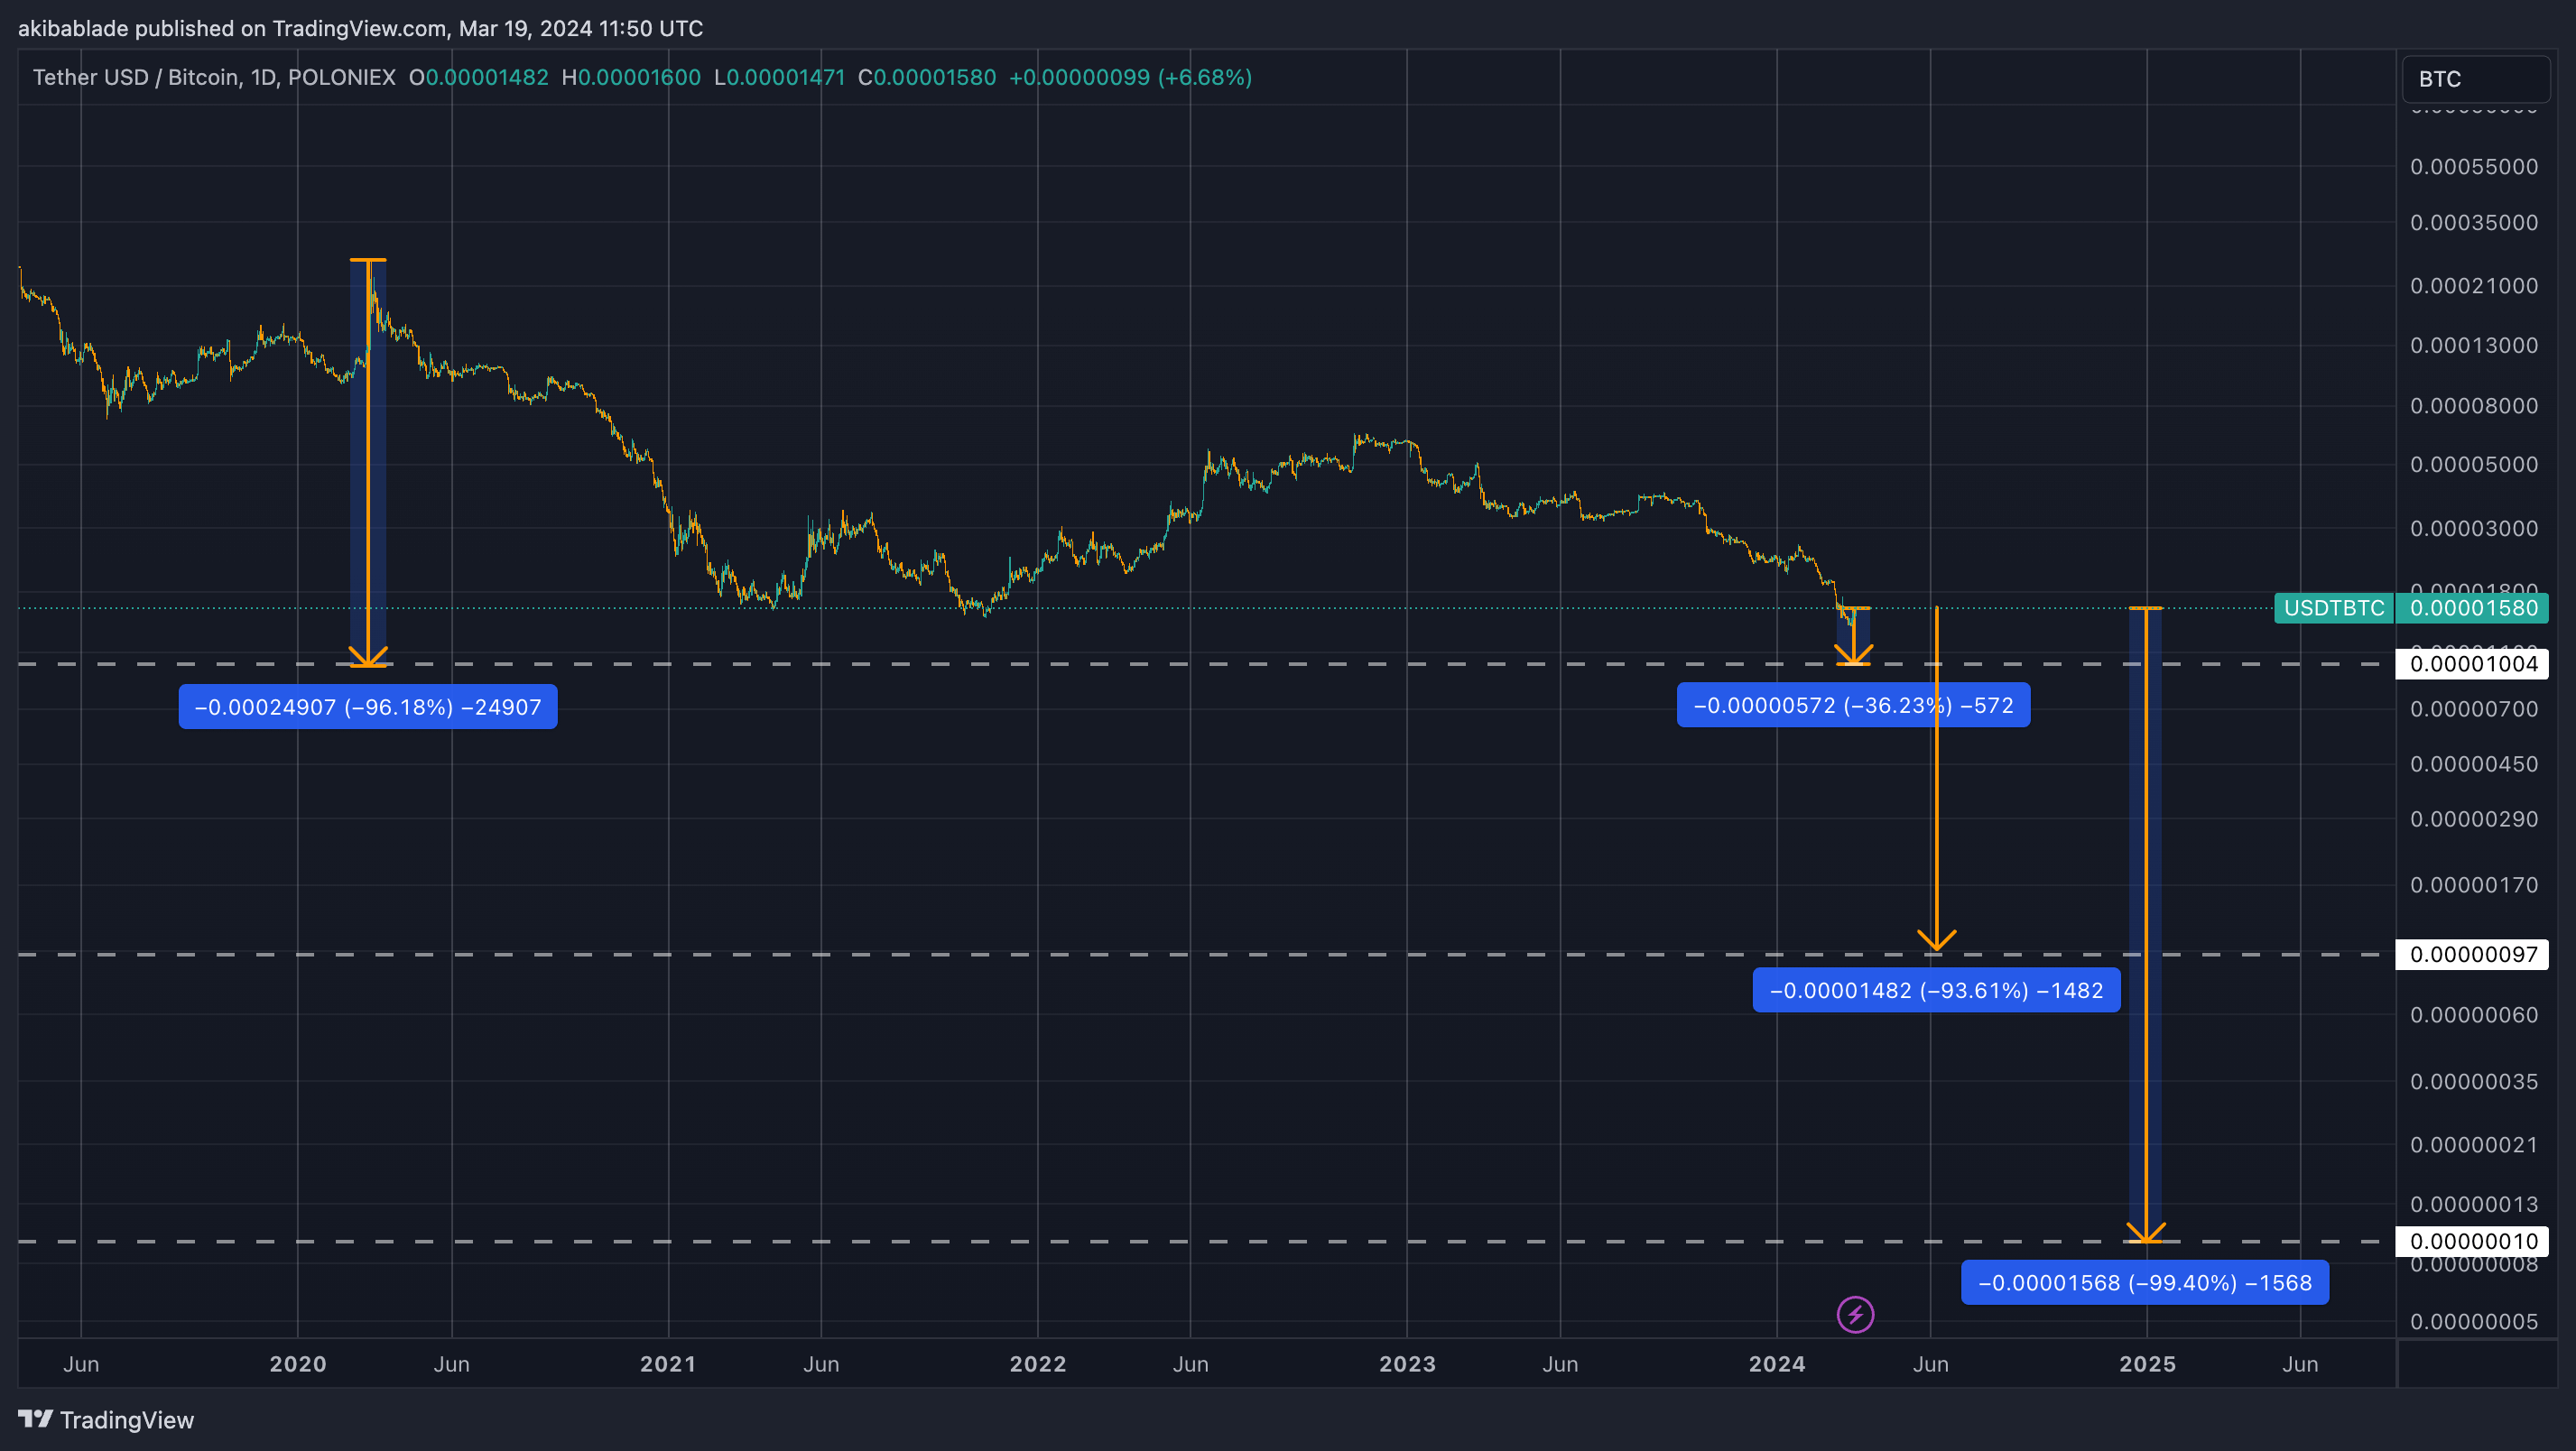 USDT/BTC since May 2020 (Source: TradingView)